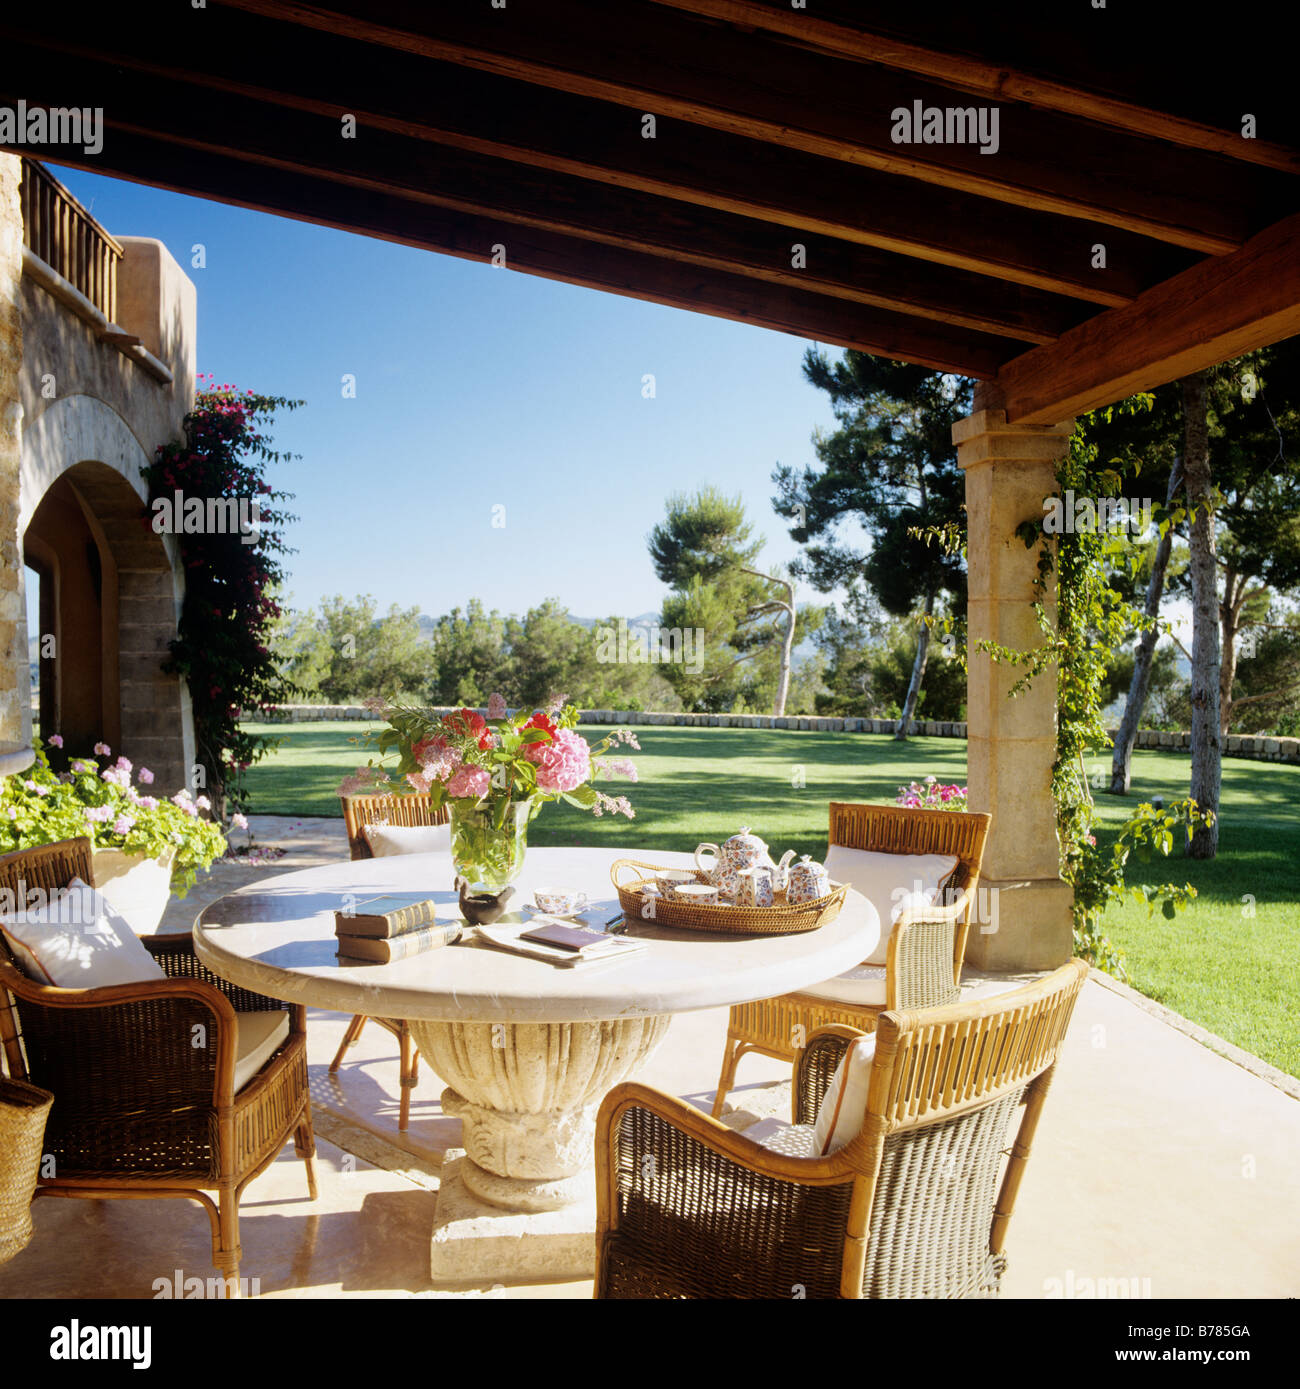 Stone table and wicker chairs on veranda / porch of Mallorcan finca restoration Stock Photo